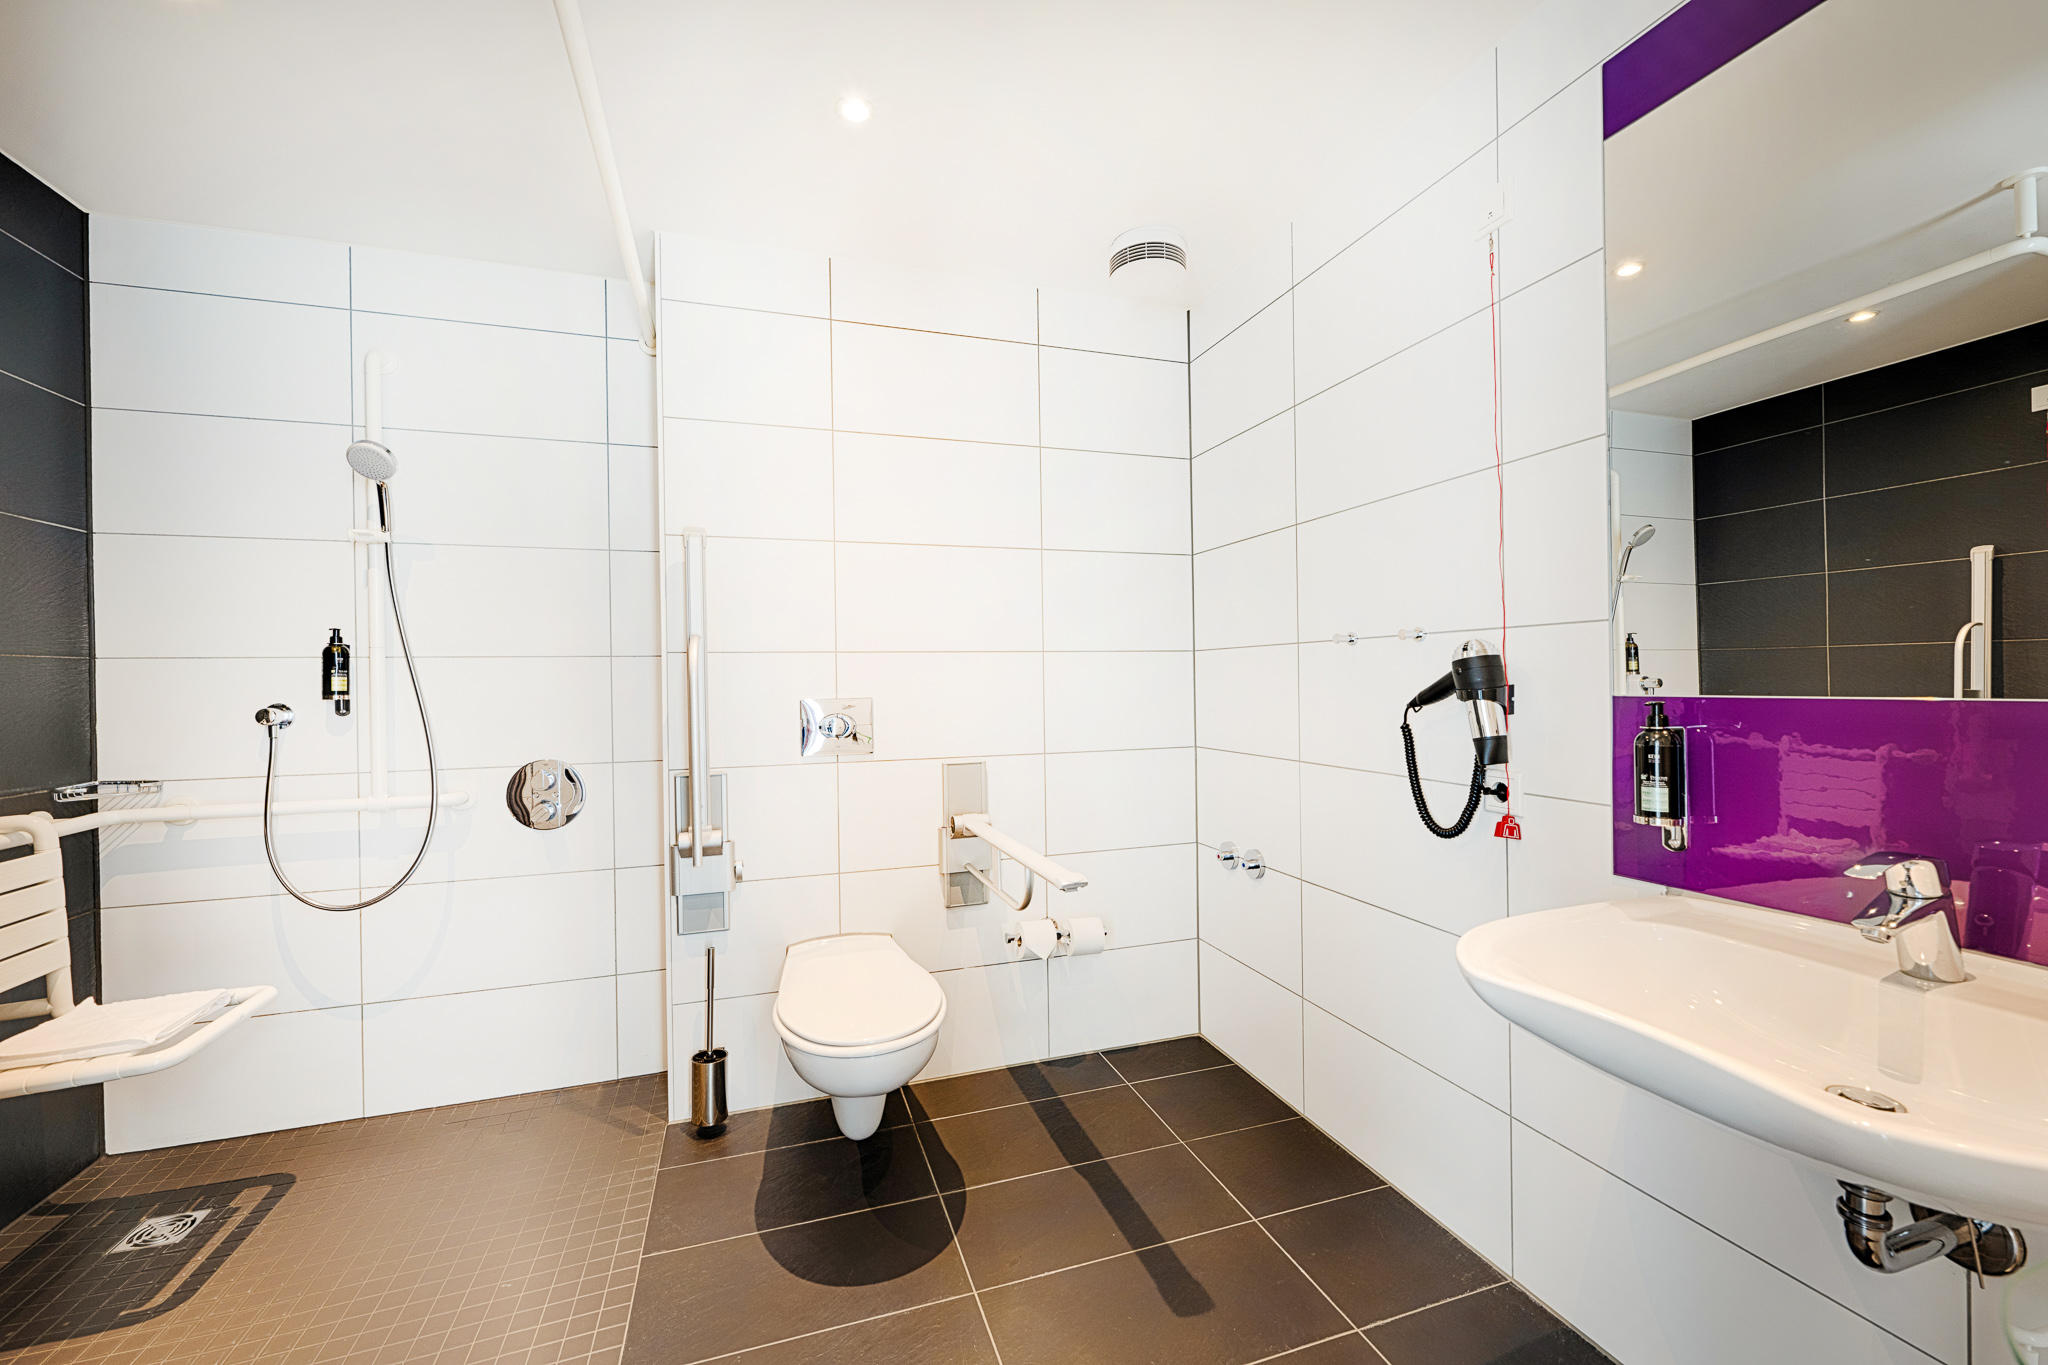 Premier Inn Berlin Alexanderplatz hotel accessible wet room with walk in shower